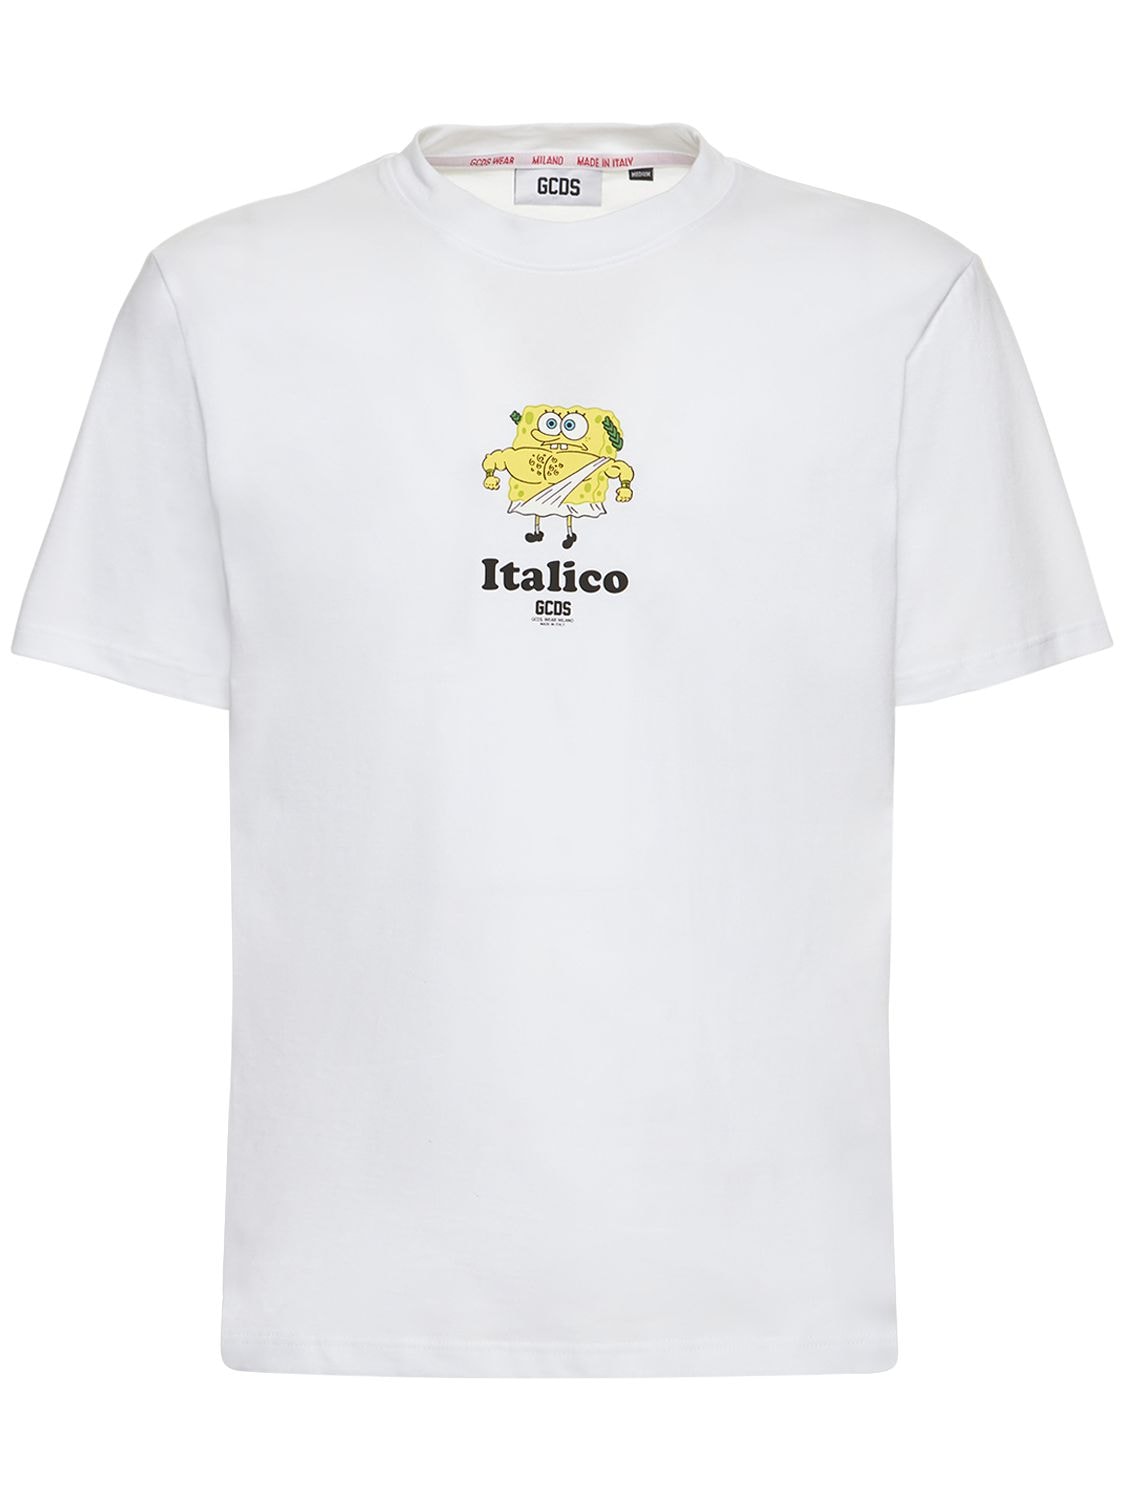 Gcds X Spongebob Italico T-shirt – MEN > CLOTHING > T-SHIRTS